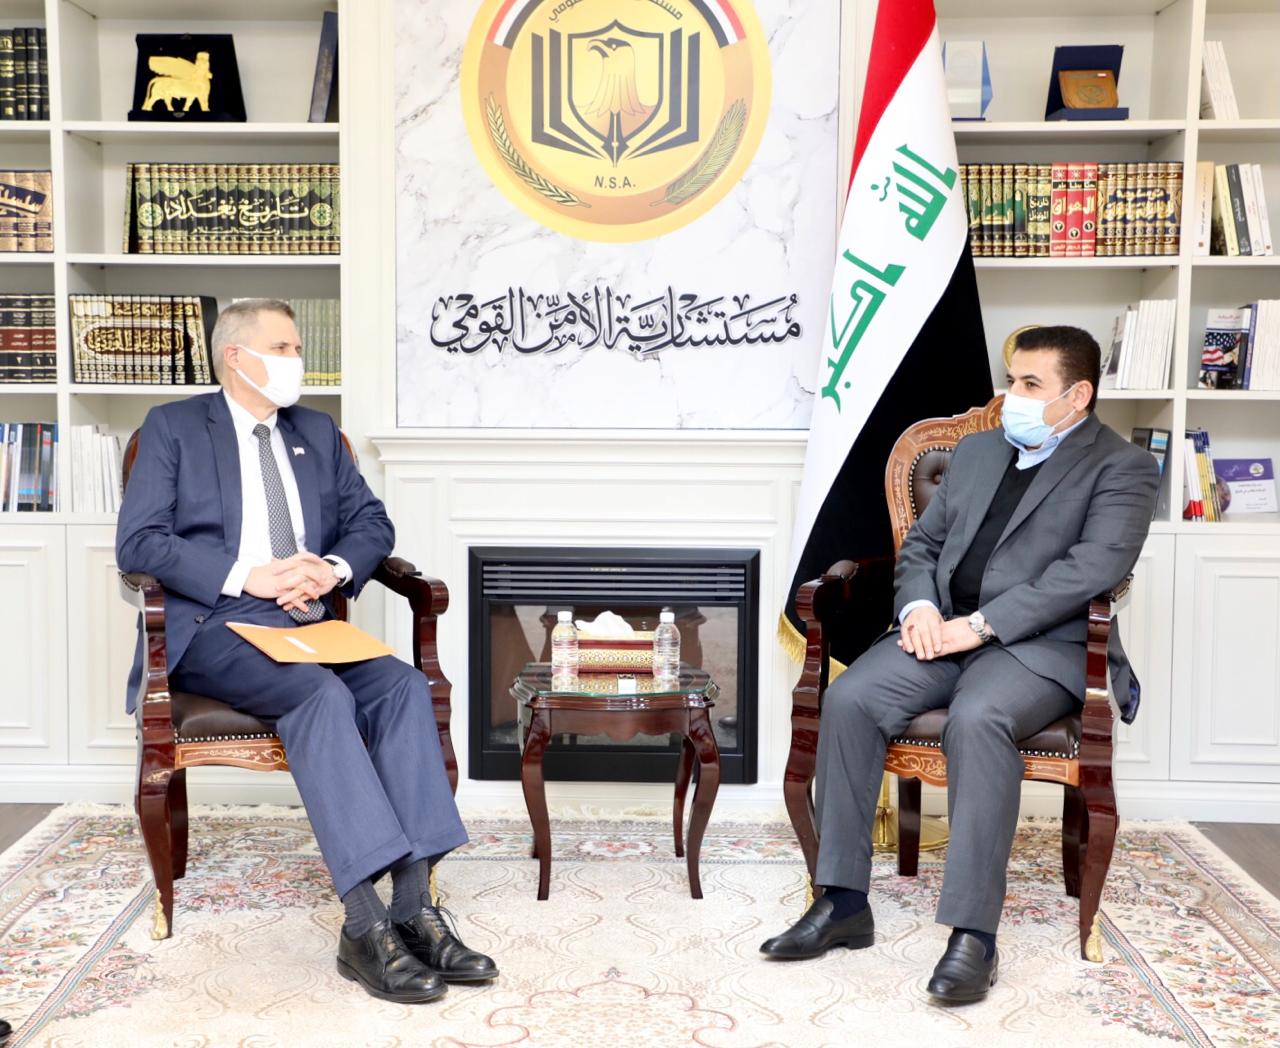 Al-Araji discusses reducing U.S. troops in Iraq with Tueller